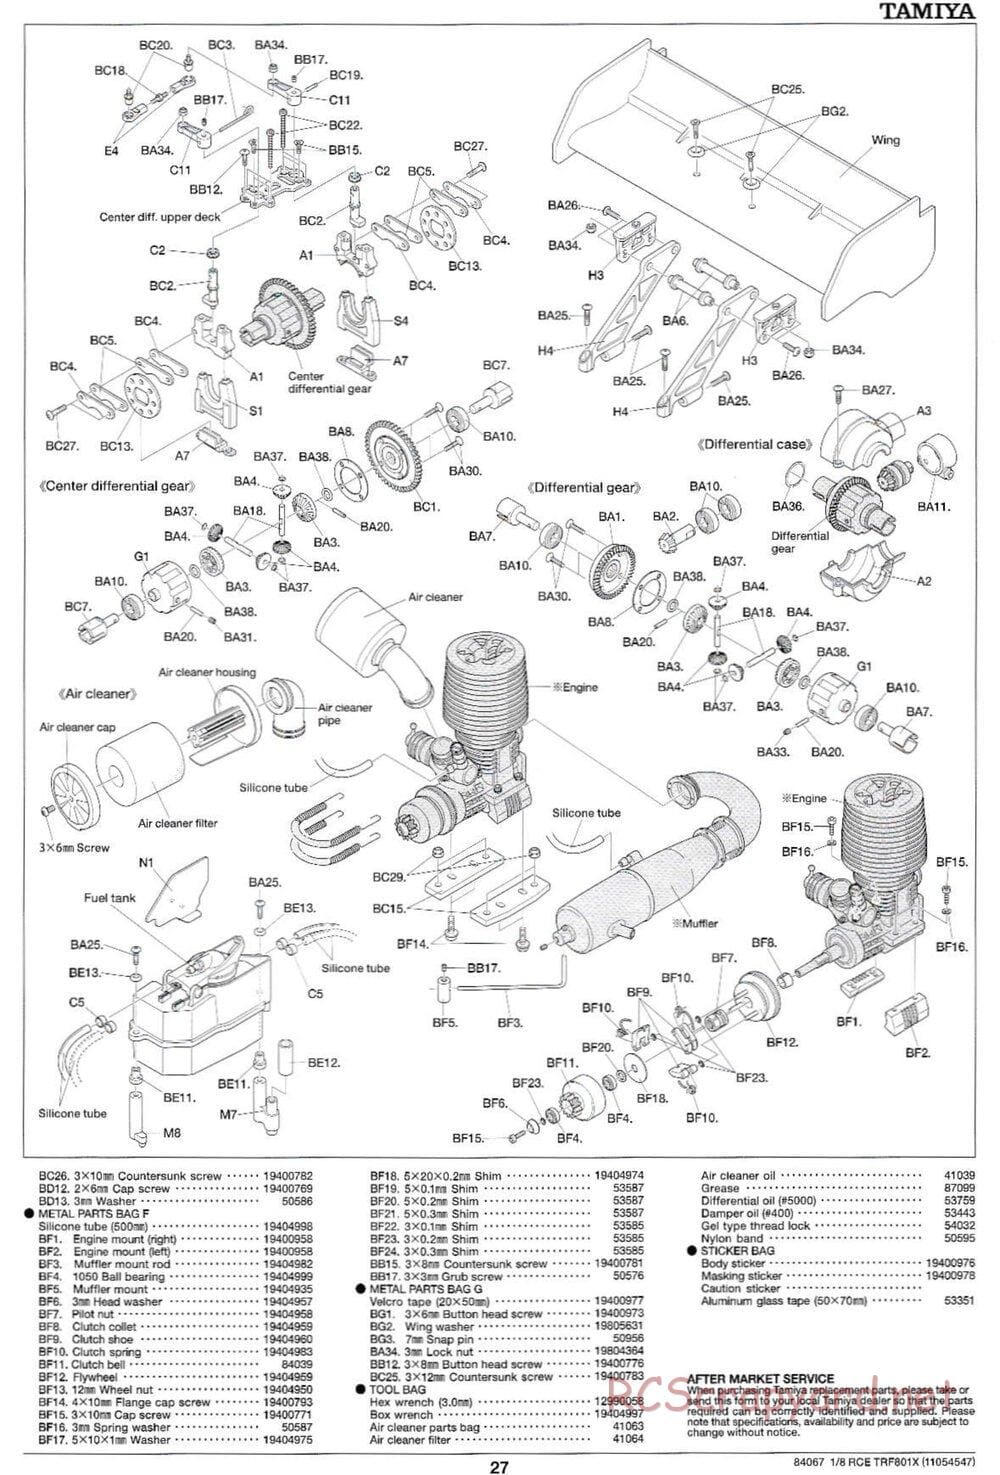 Tamiya - TRF801X Chassis - Manual - Page 27